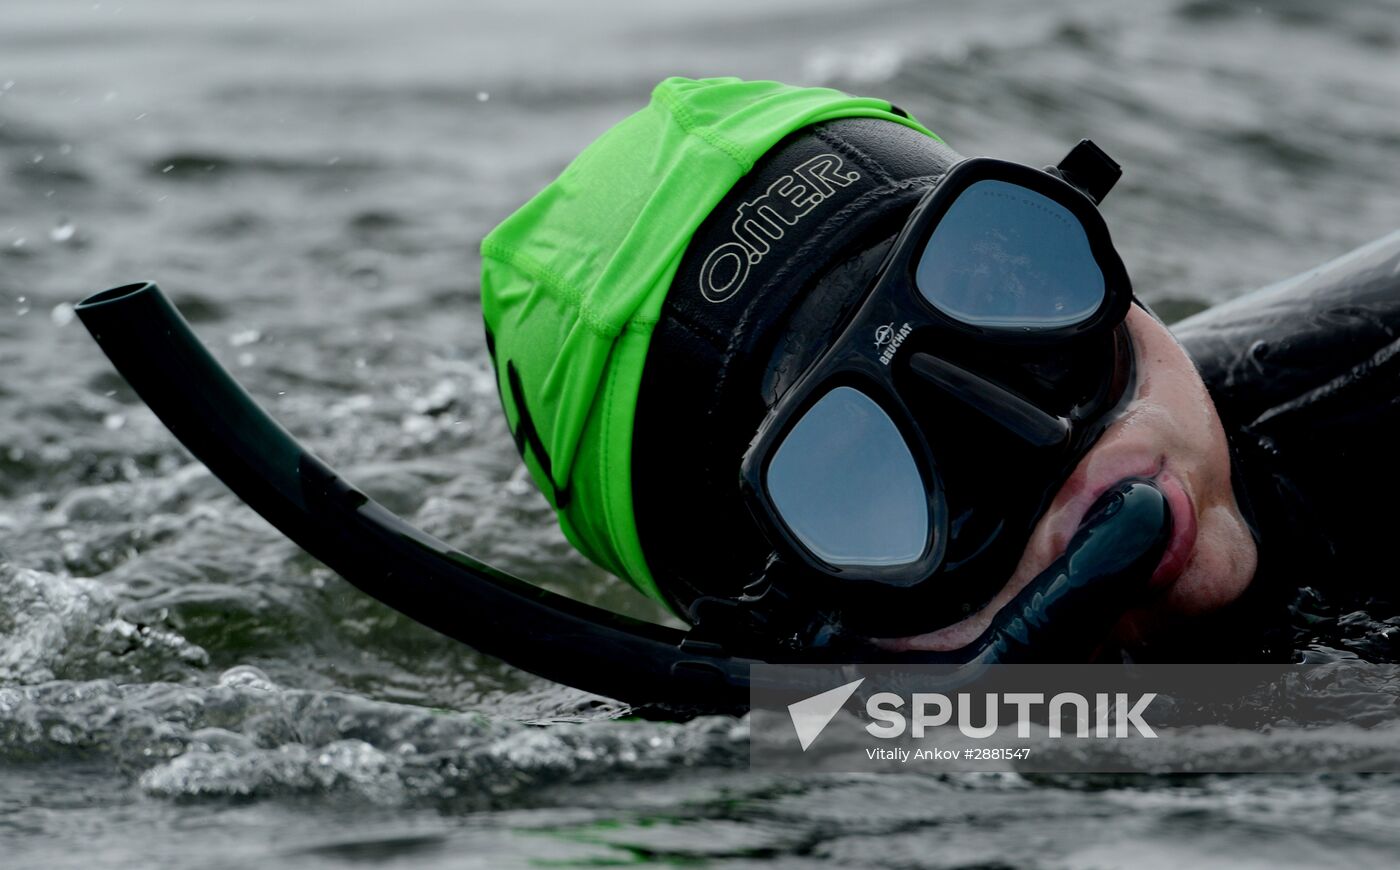 Marathon heat across Amur Bay in Vladivostok